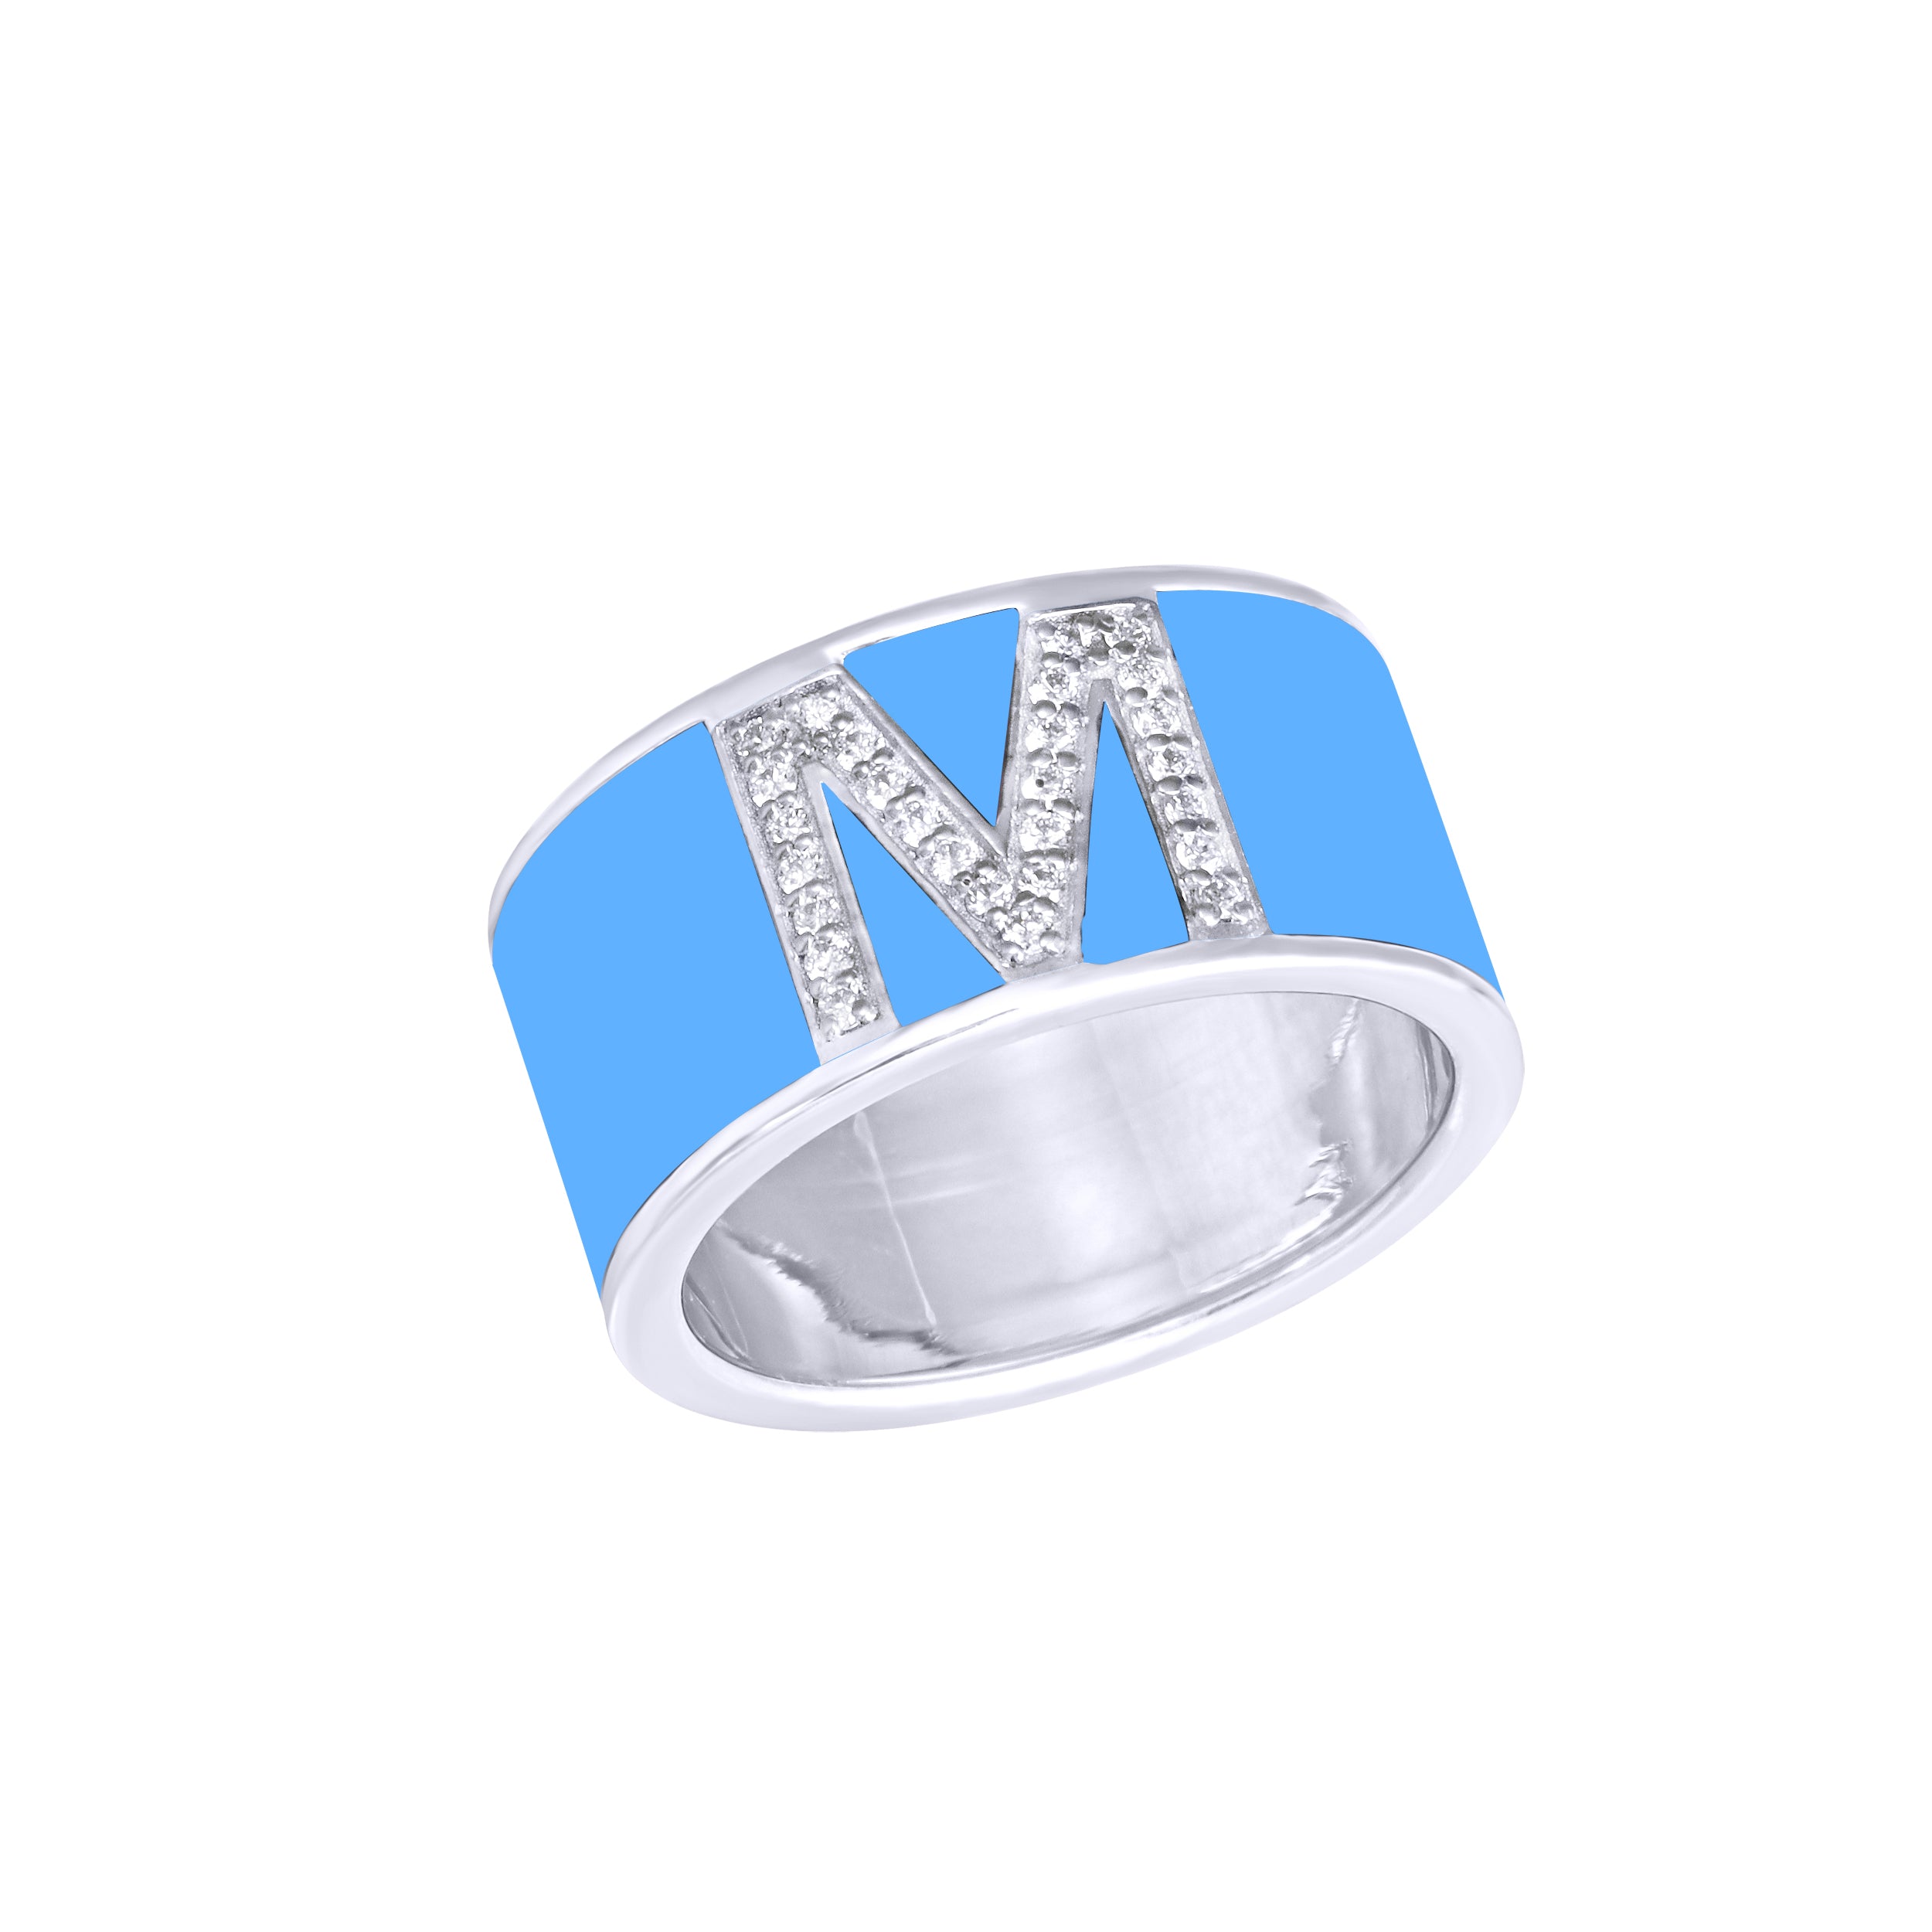 Personalised Black Enamel Diamond Ring